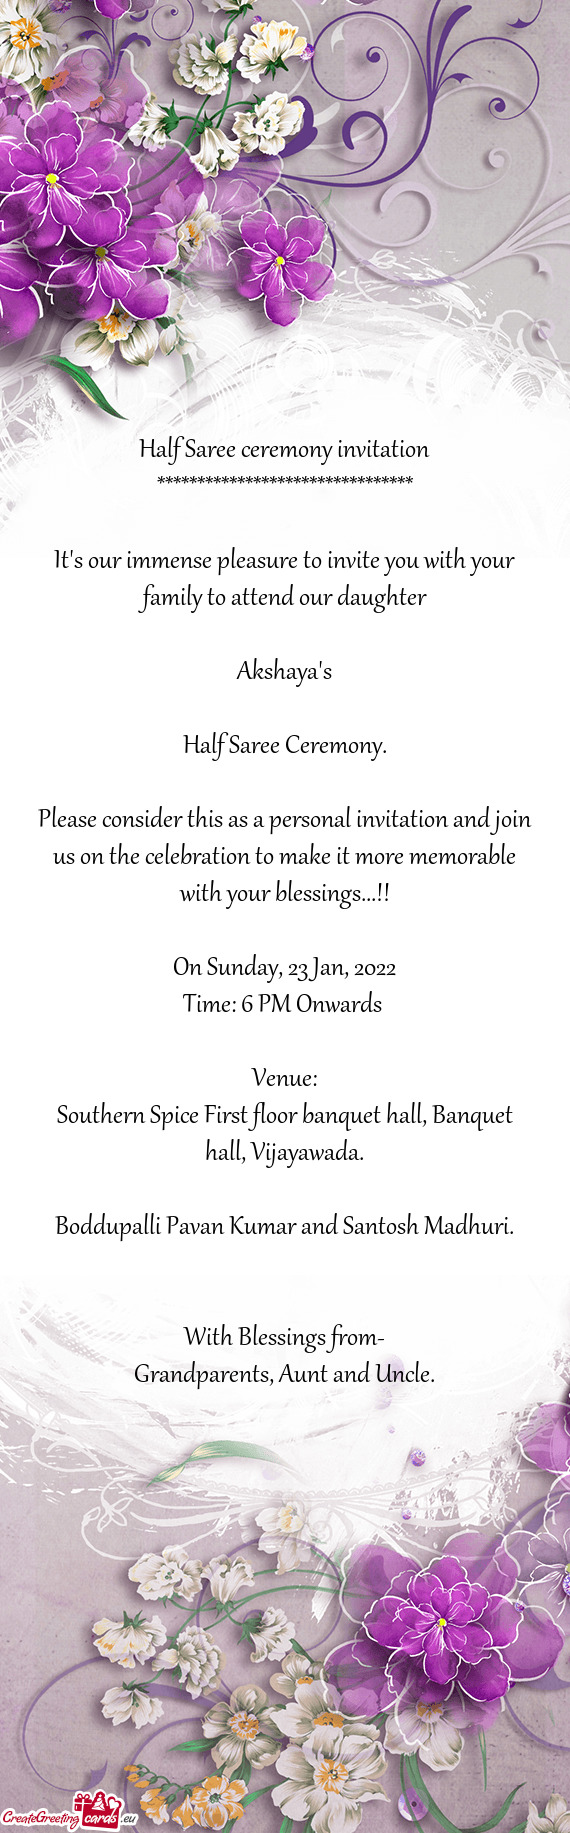 Southern Spice First floor banquet hall, Banquet hall, Vijayawada